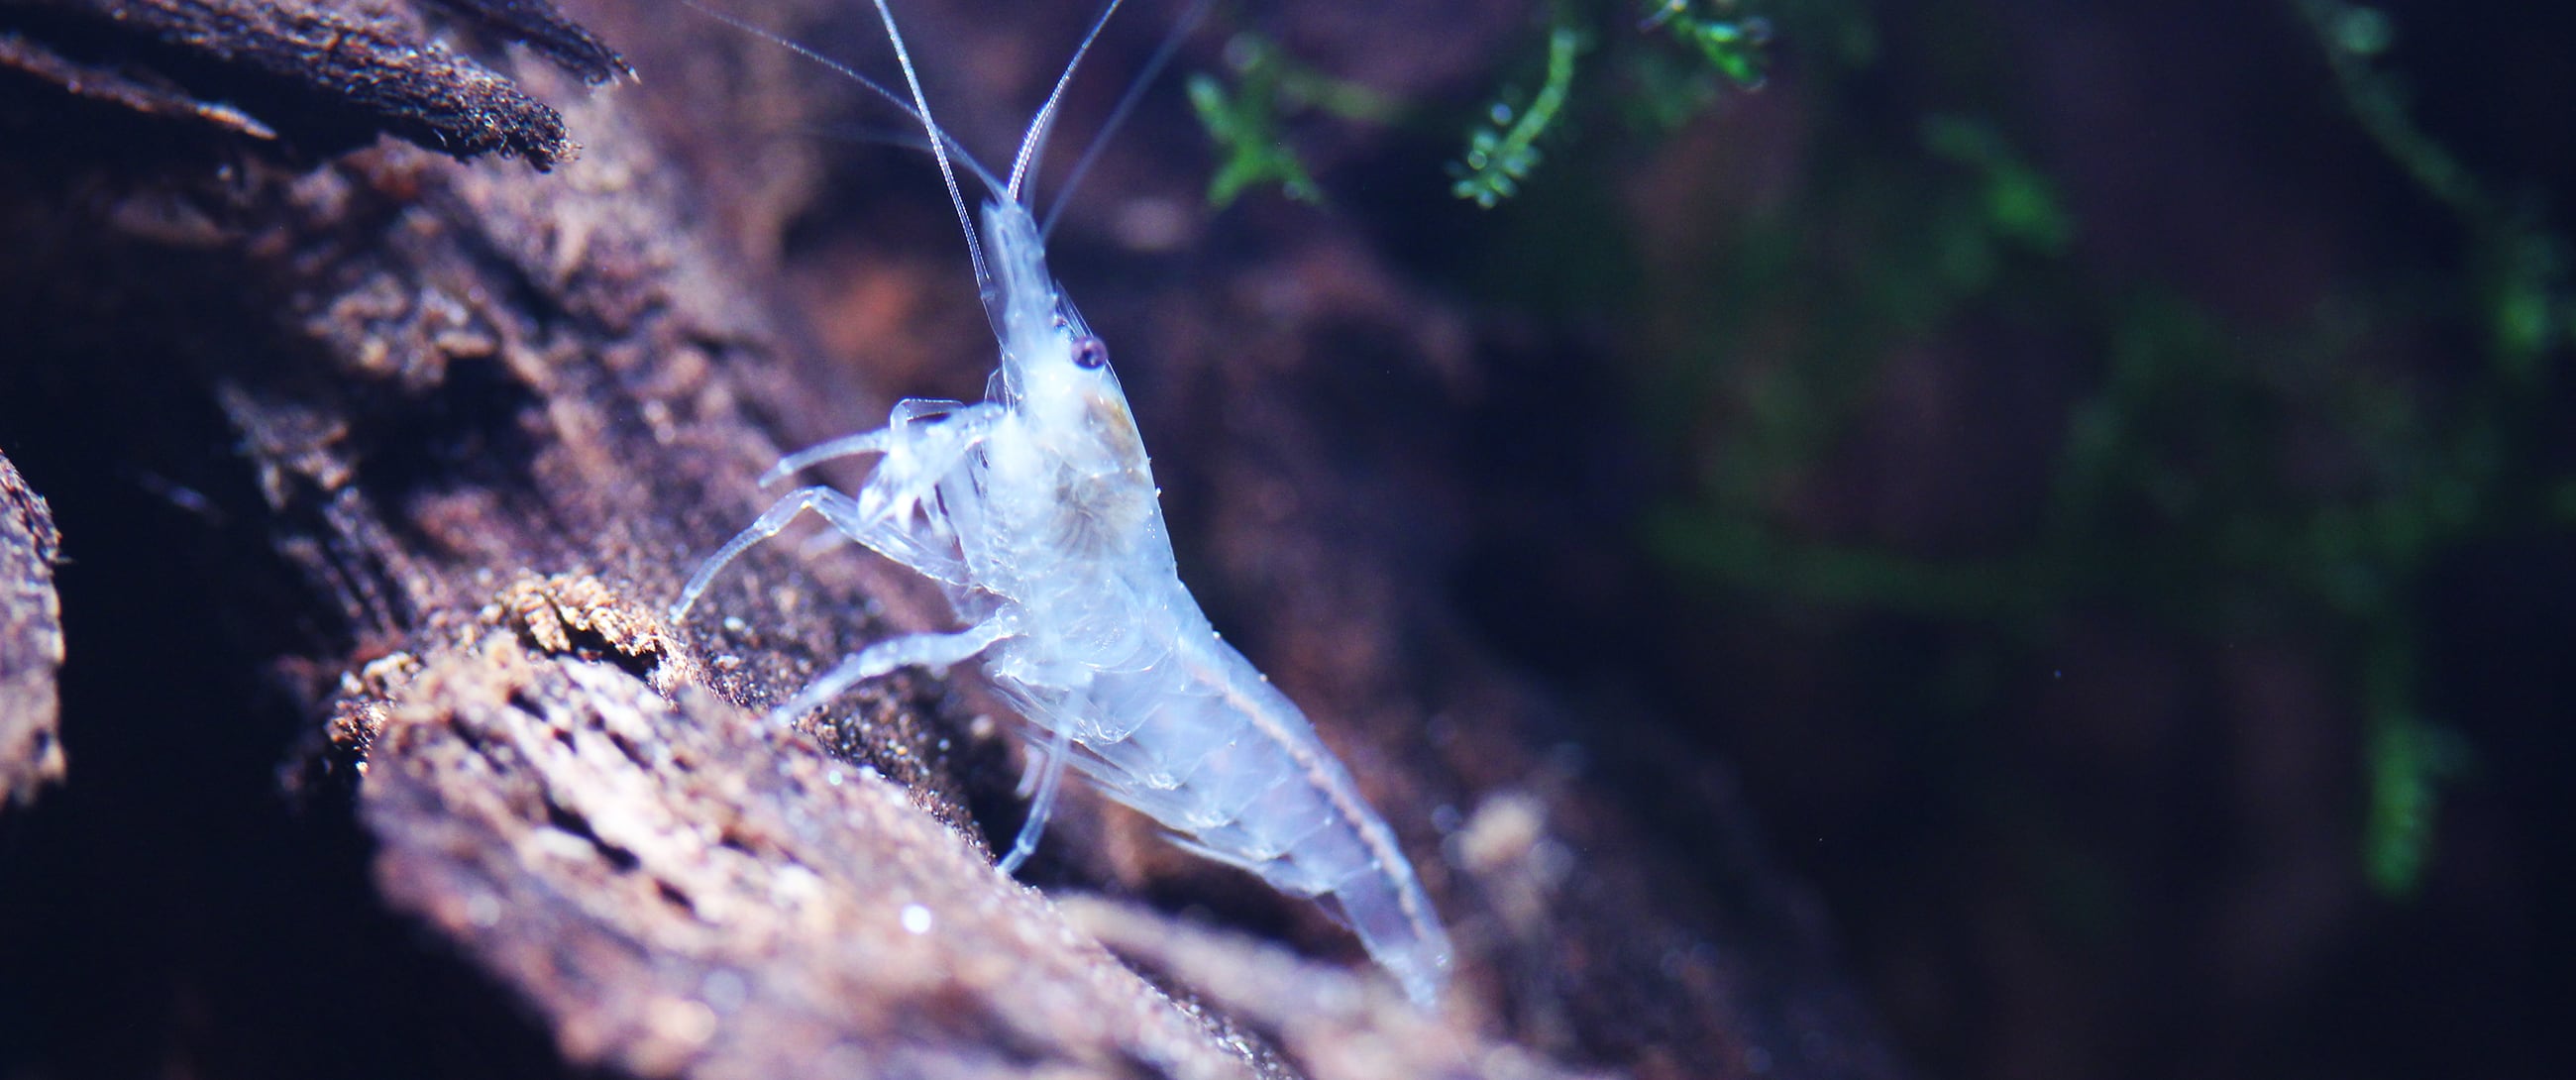 Neocaridina palmata White Pearl - Freshwater shrimp